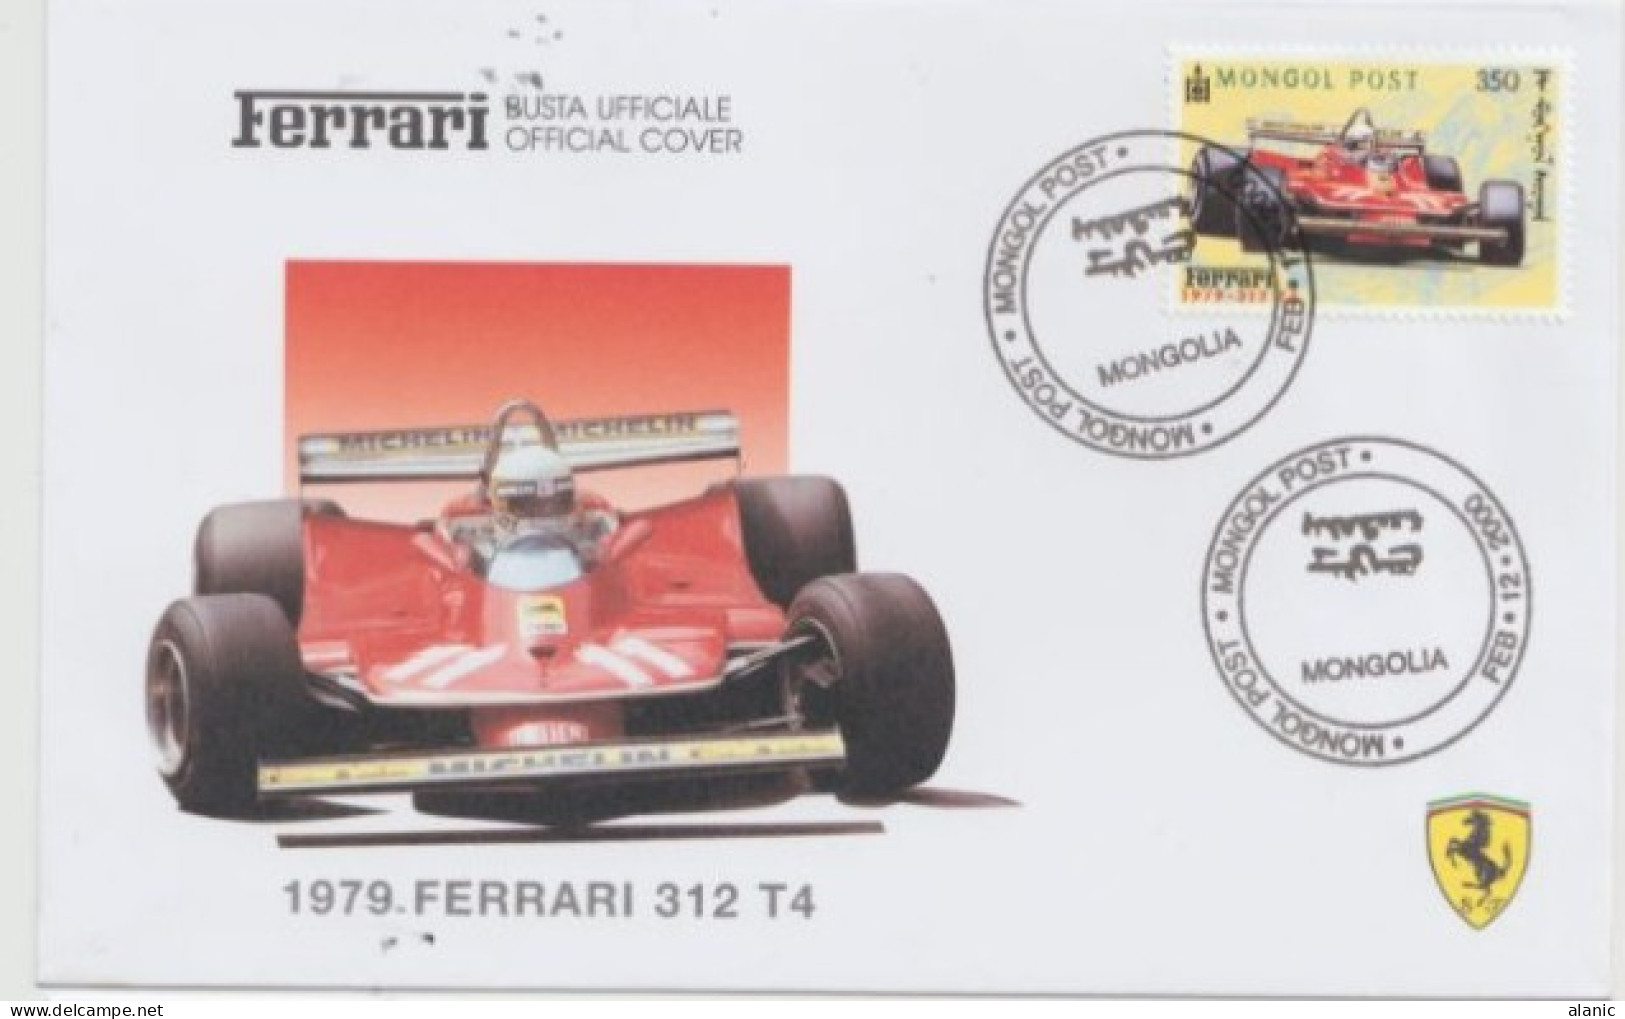 Mongol Post 12/02/2000-FDC-Enzo Ferrari-AUTOMOBILES FERRARI-SERIE DE 6 VALEURS-TBE--AUTOMOB - Autos